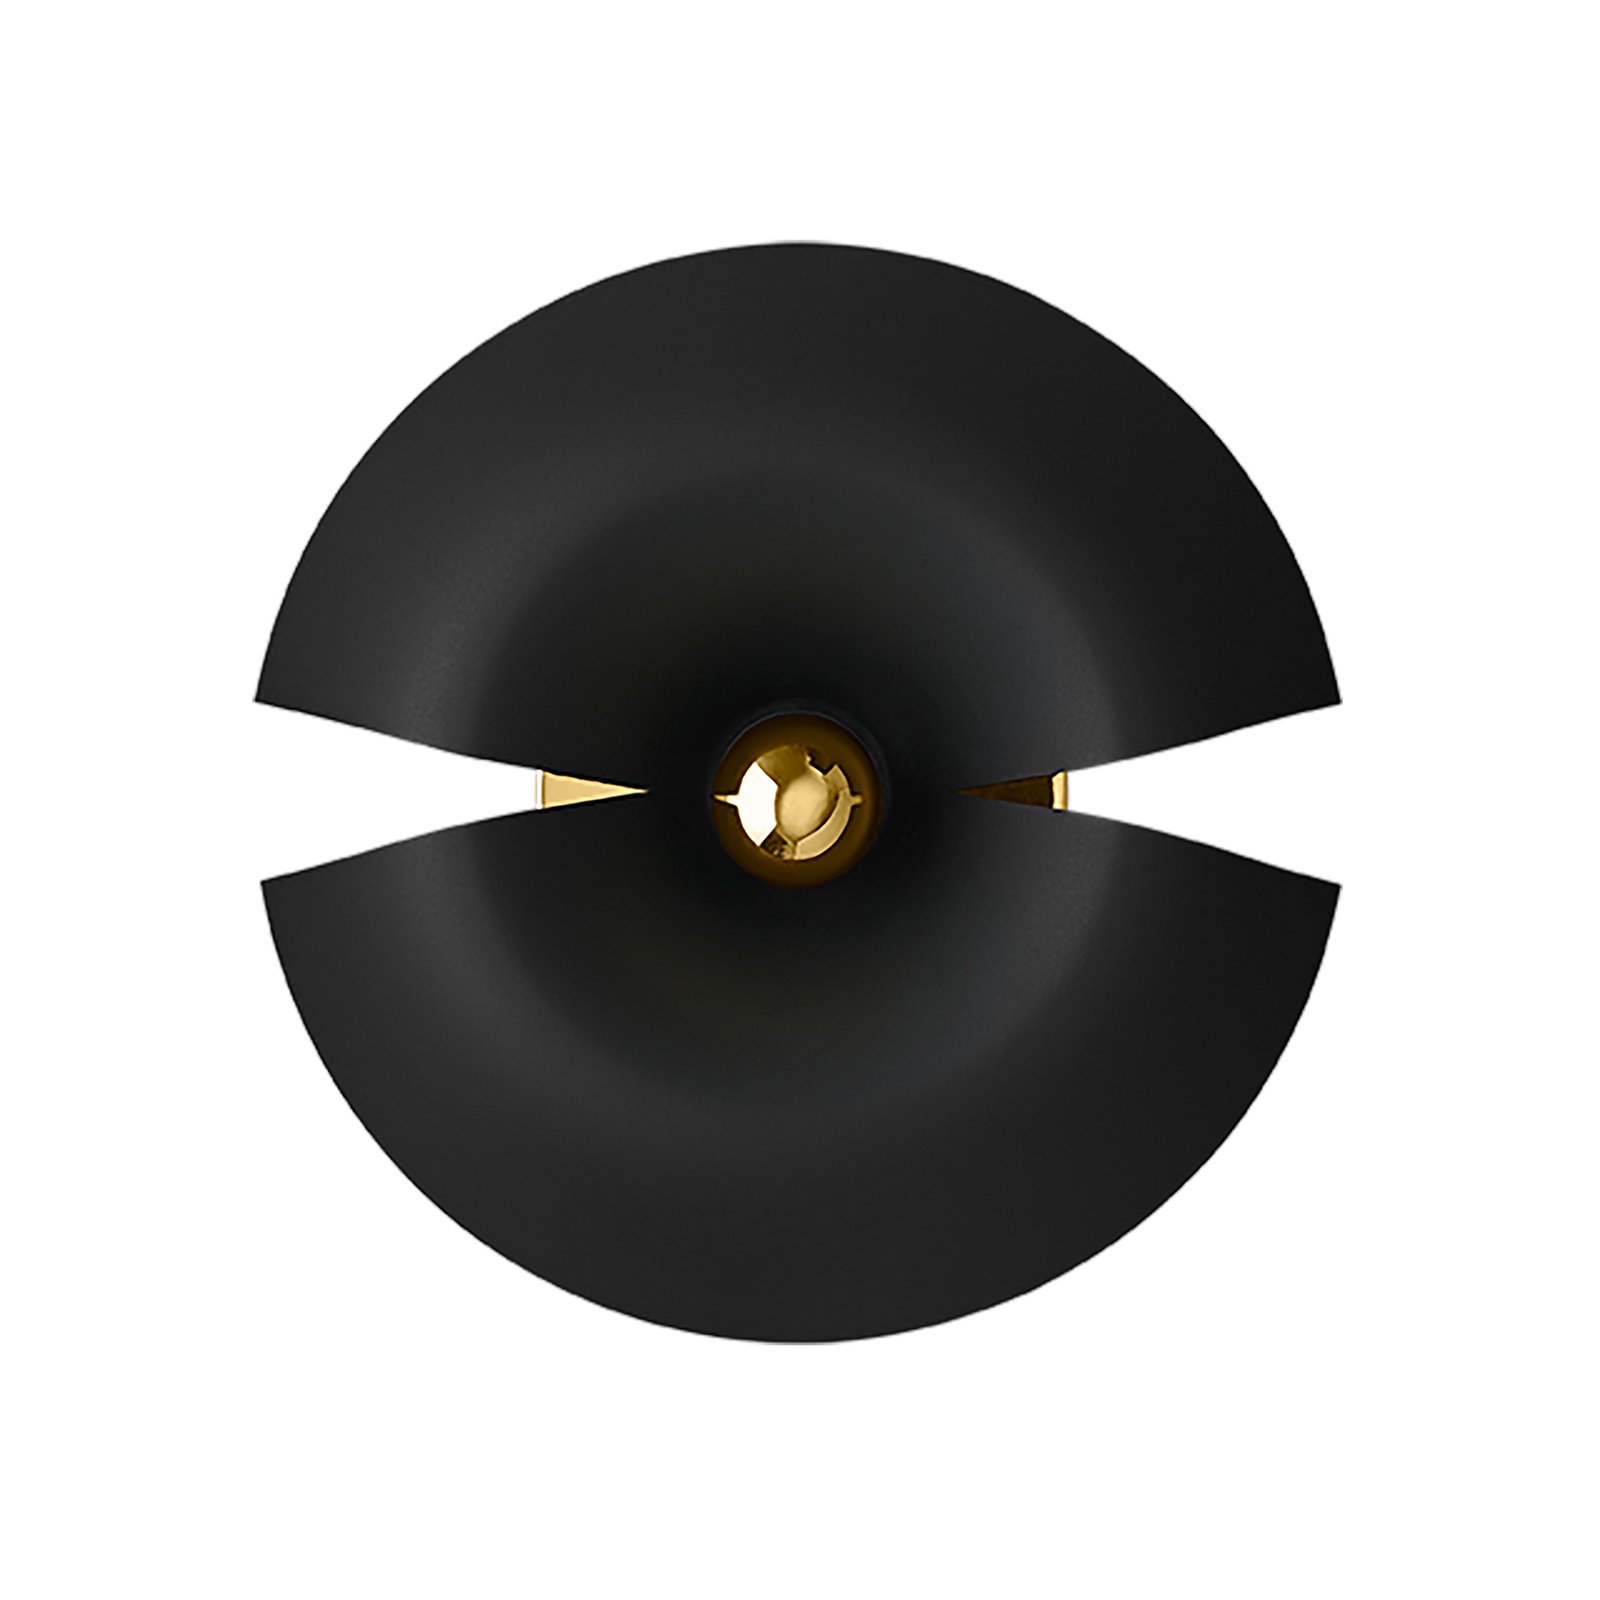 Nástěnné svítidlo AYTM Cycnus, černé, Ø 30 cm, zástrčka, hliník, E27